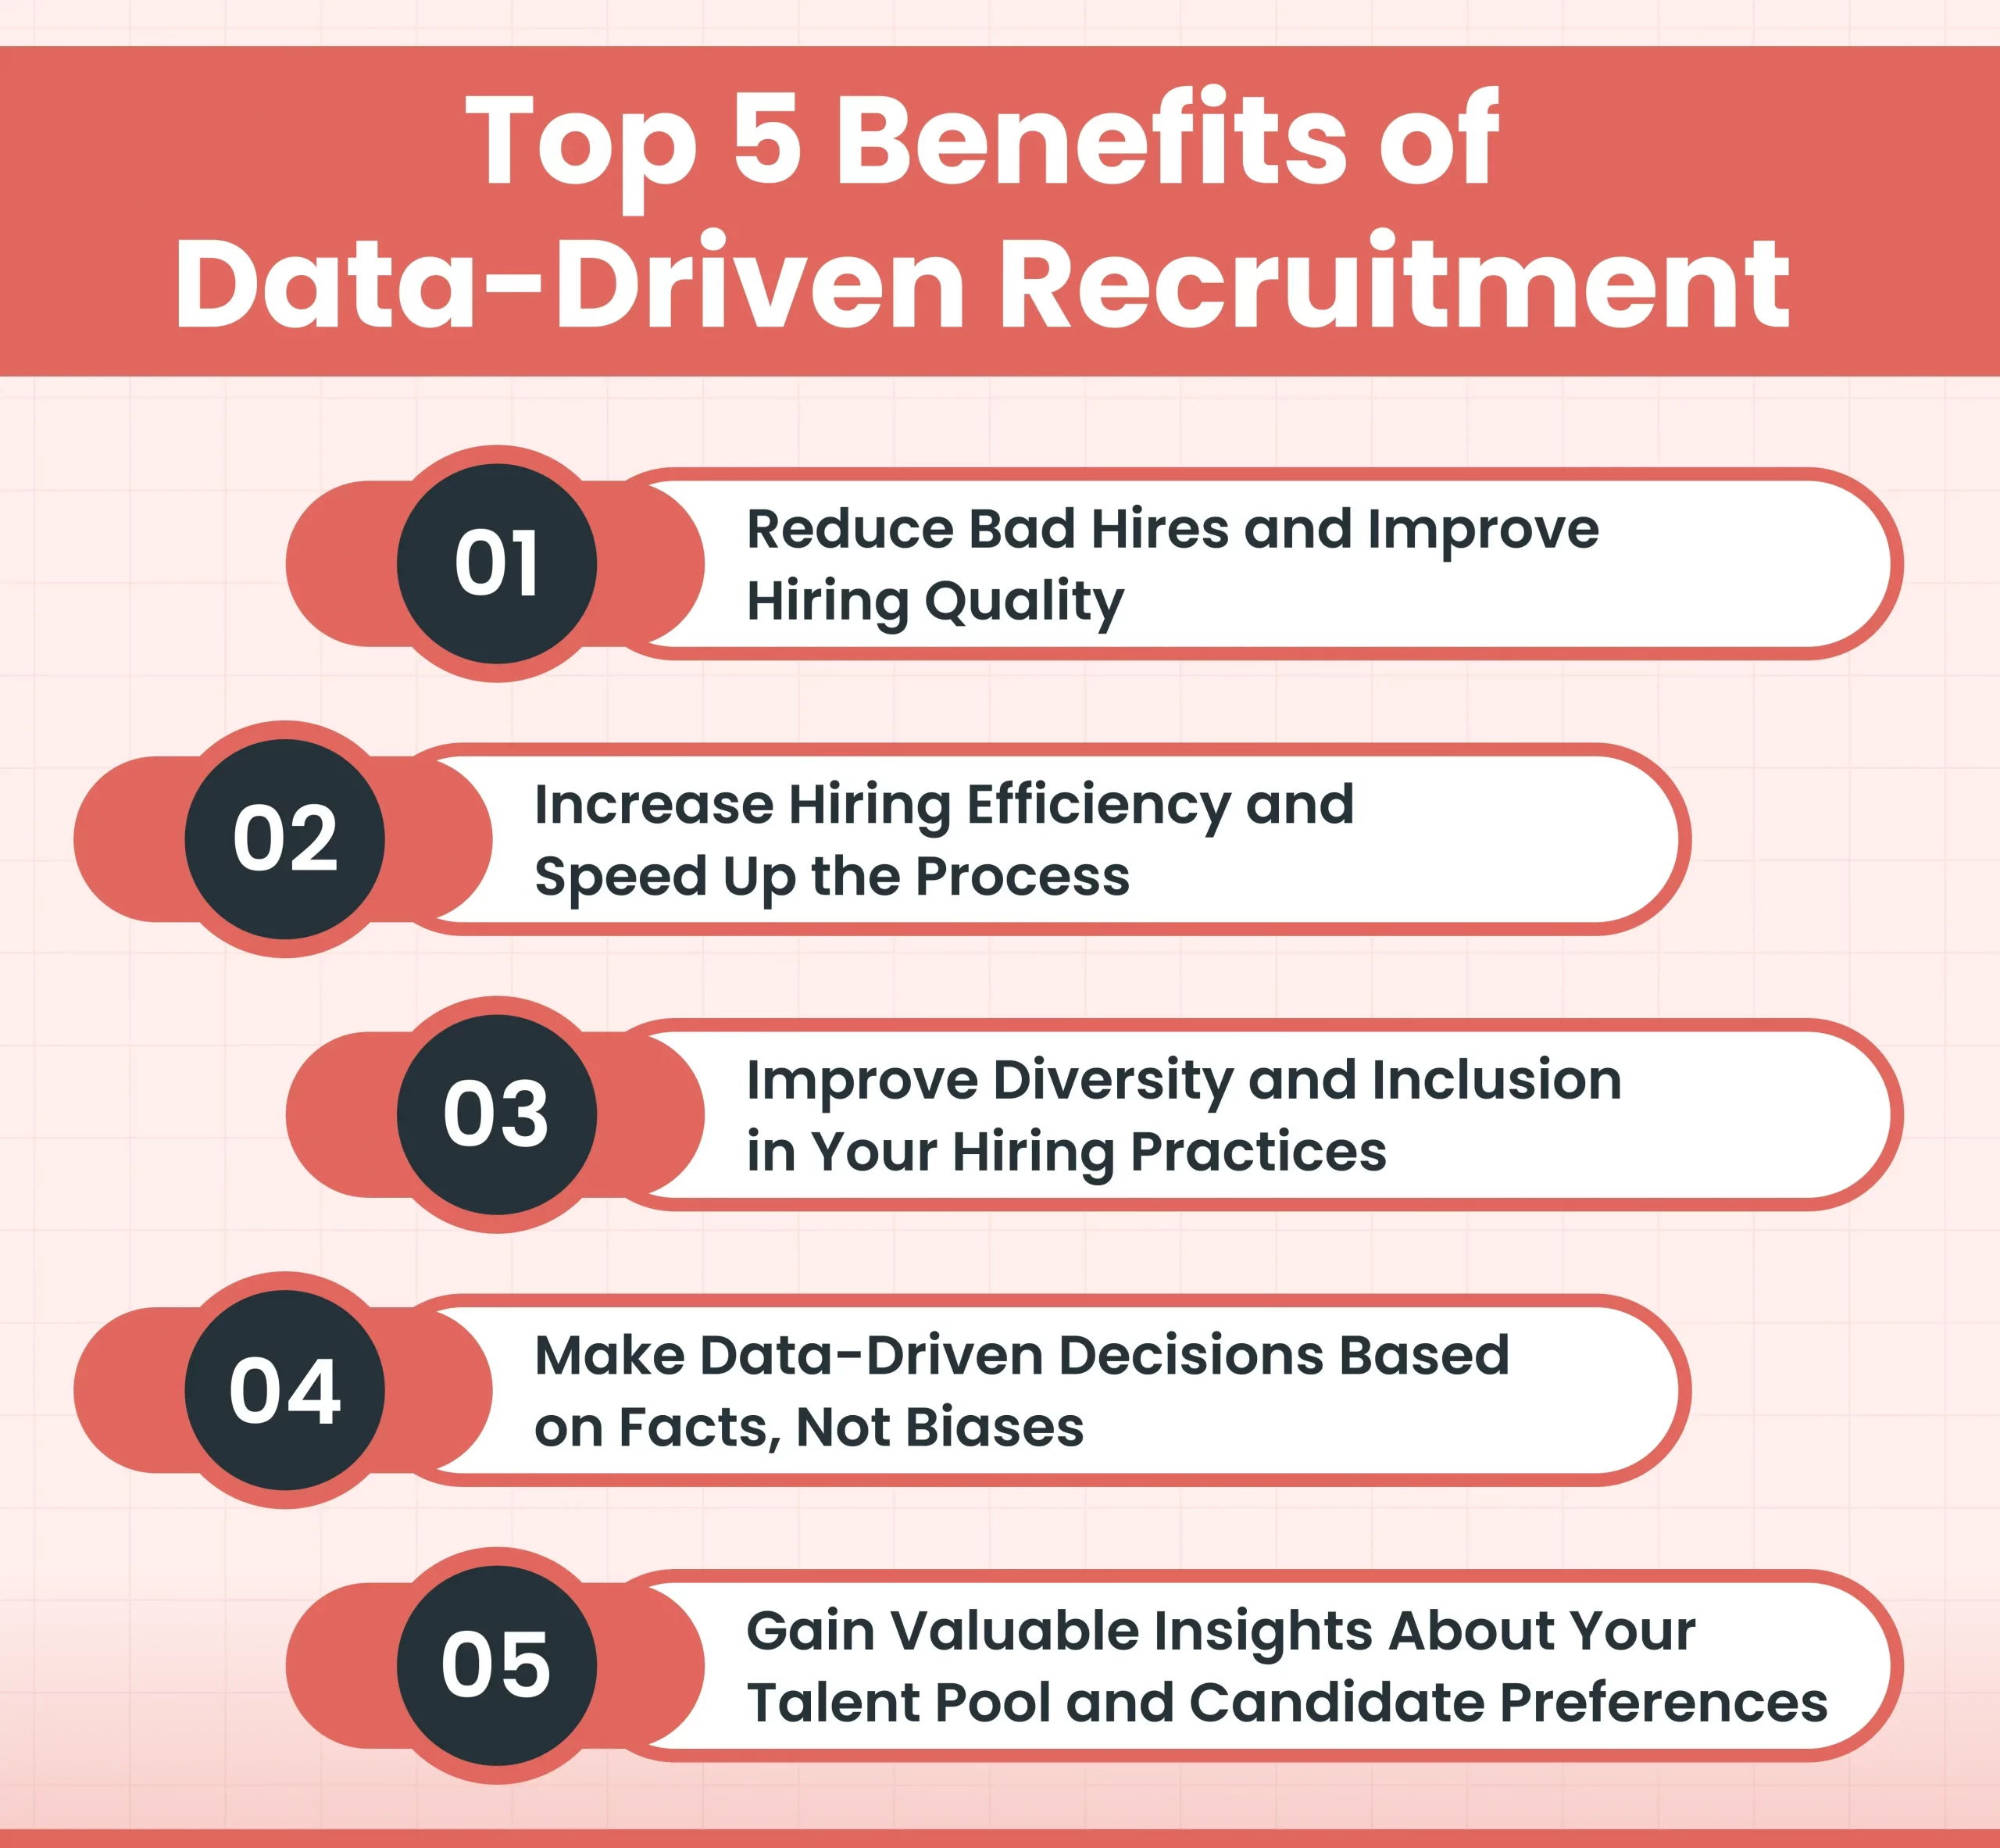 Benefits of Data-Driven Recruitment